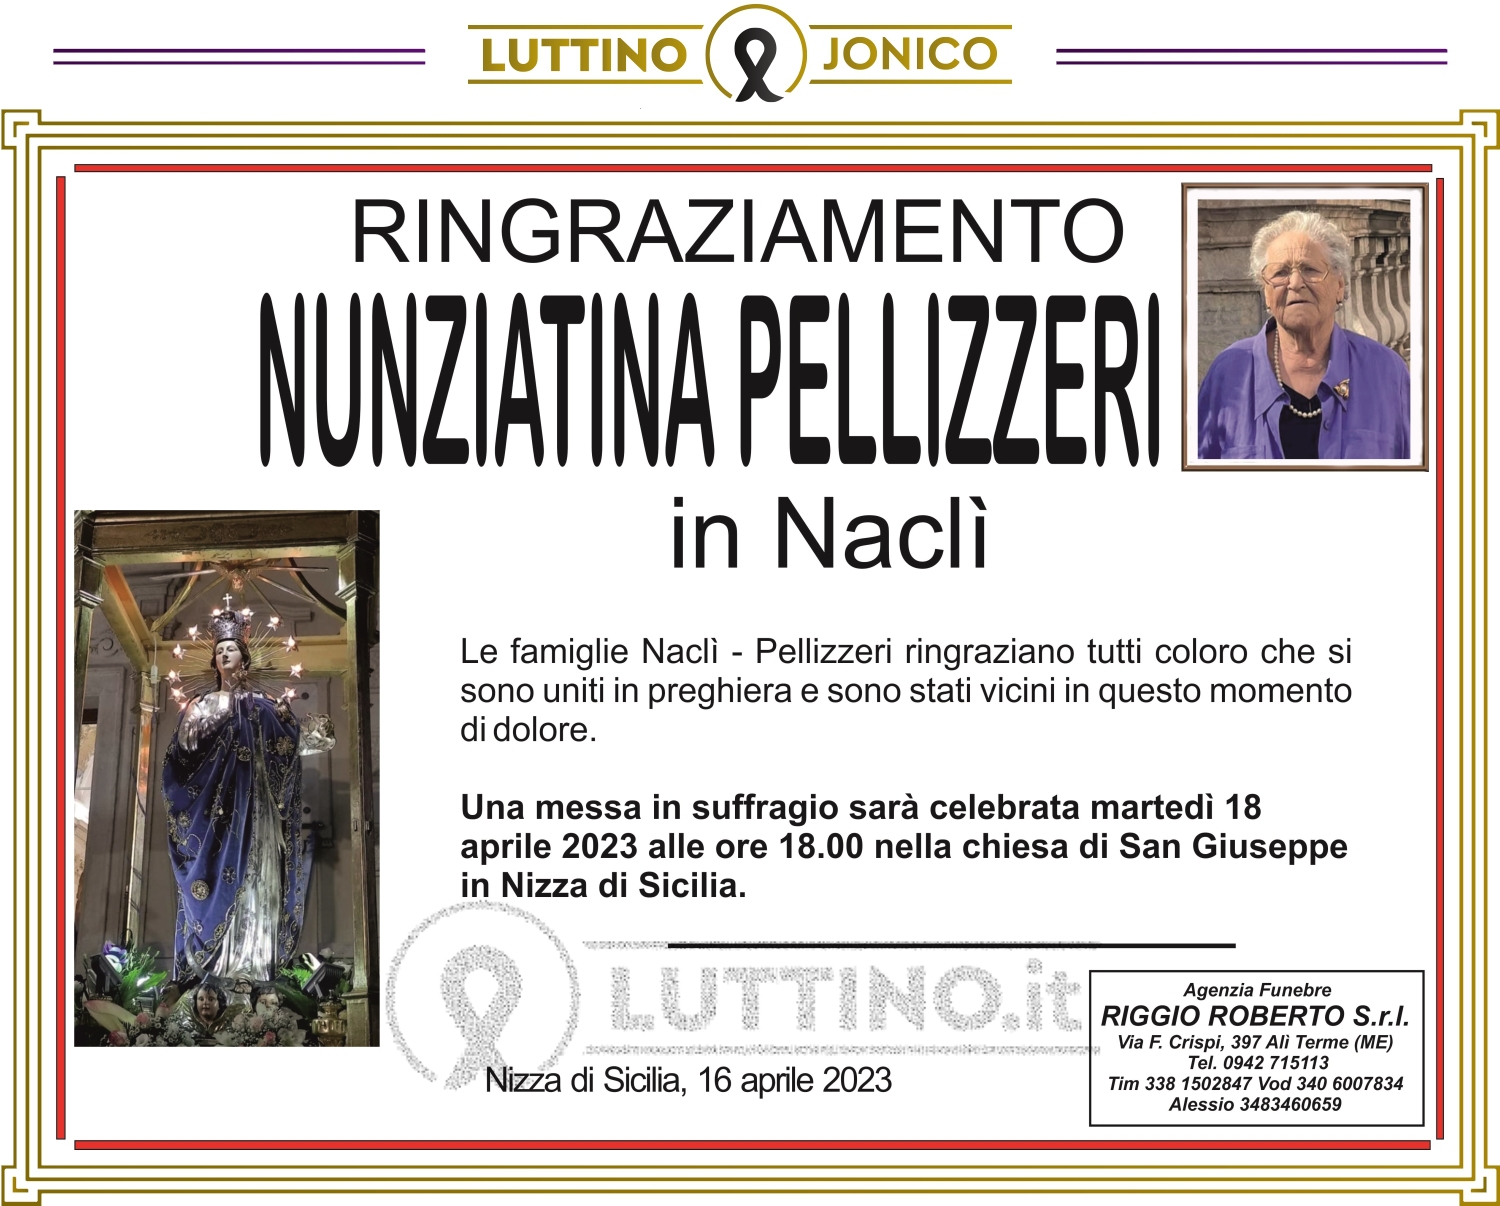 Nunziatina Pellizzeri